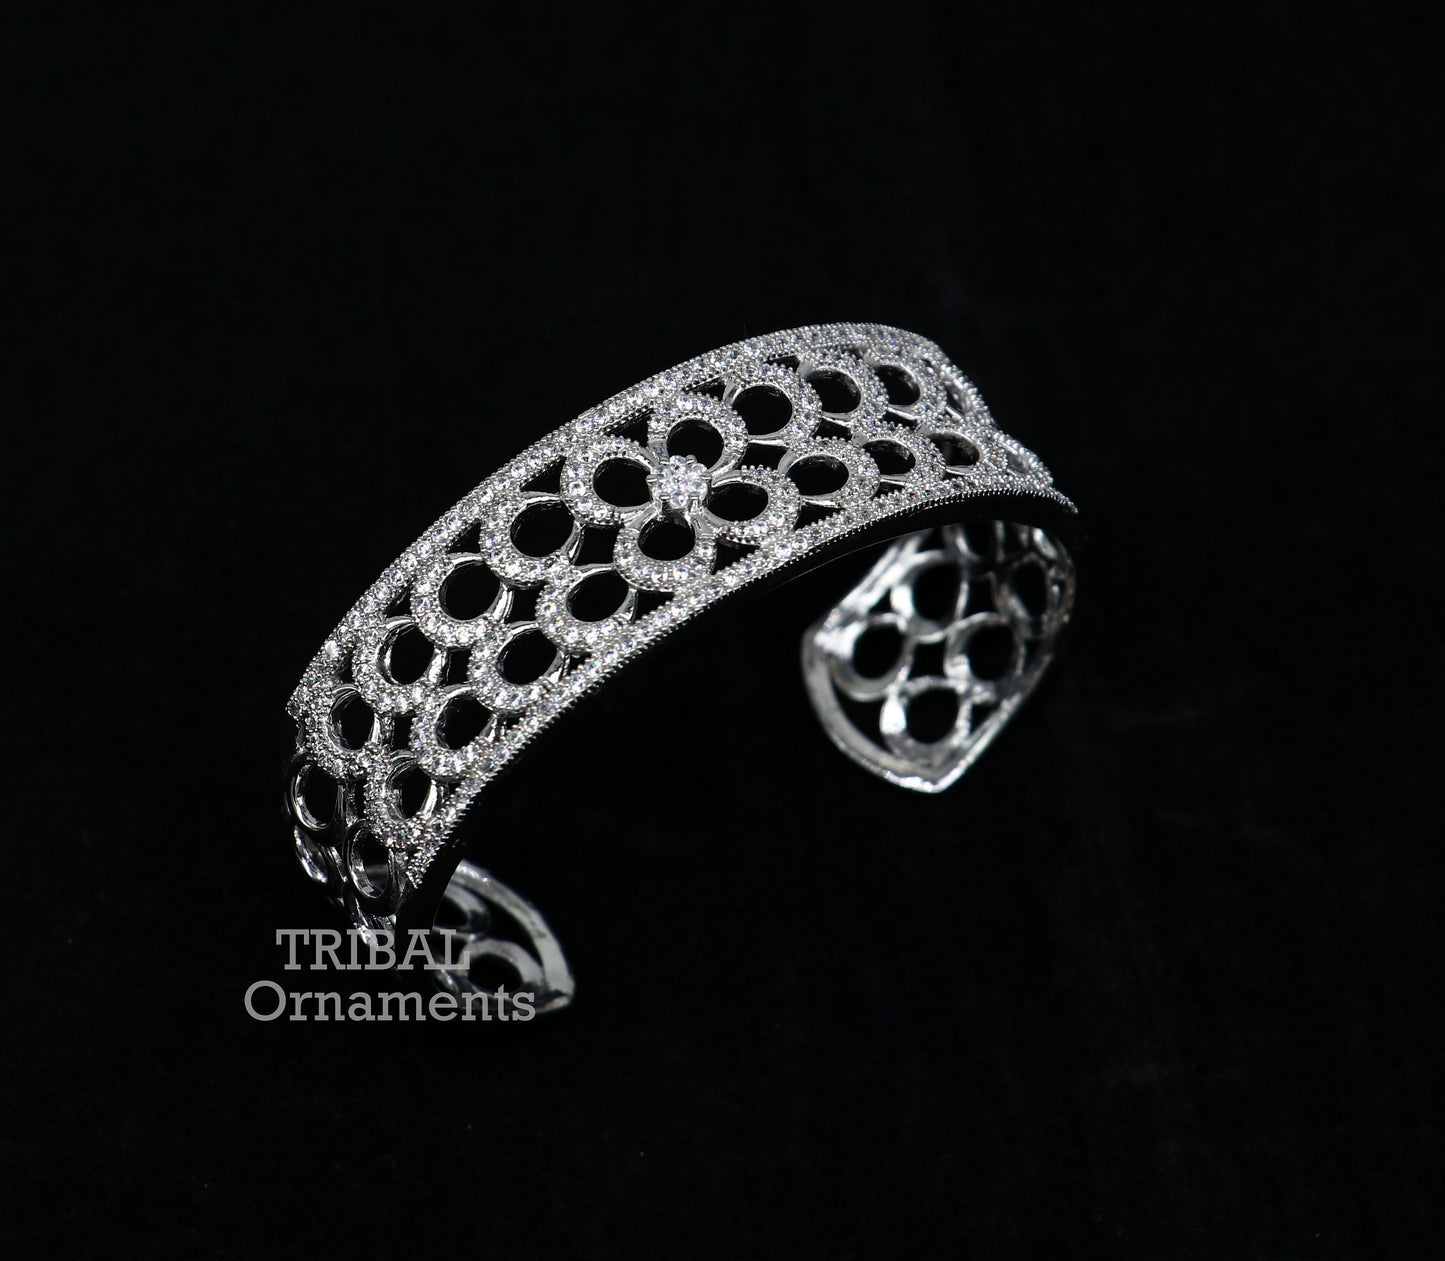 925 sterling silver handmade amazing cubic zircon stone adjustable cuff bangle bracelet kada customized girl's jewelry cuff80 - TRIBAL ORNAMENTS